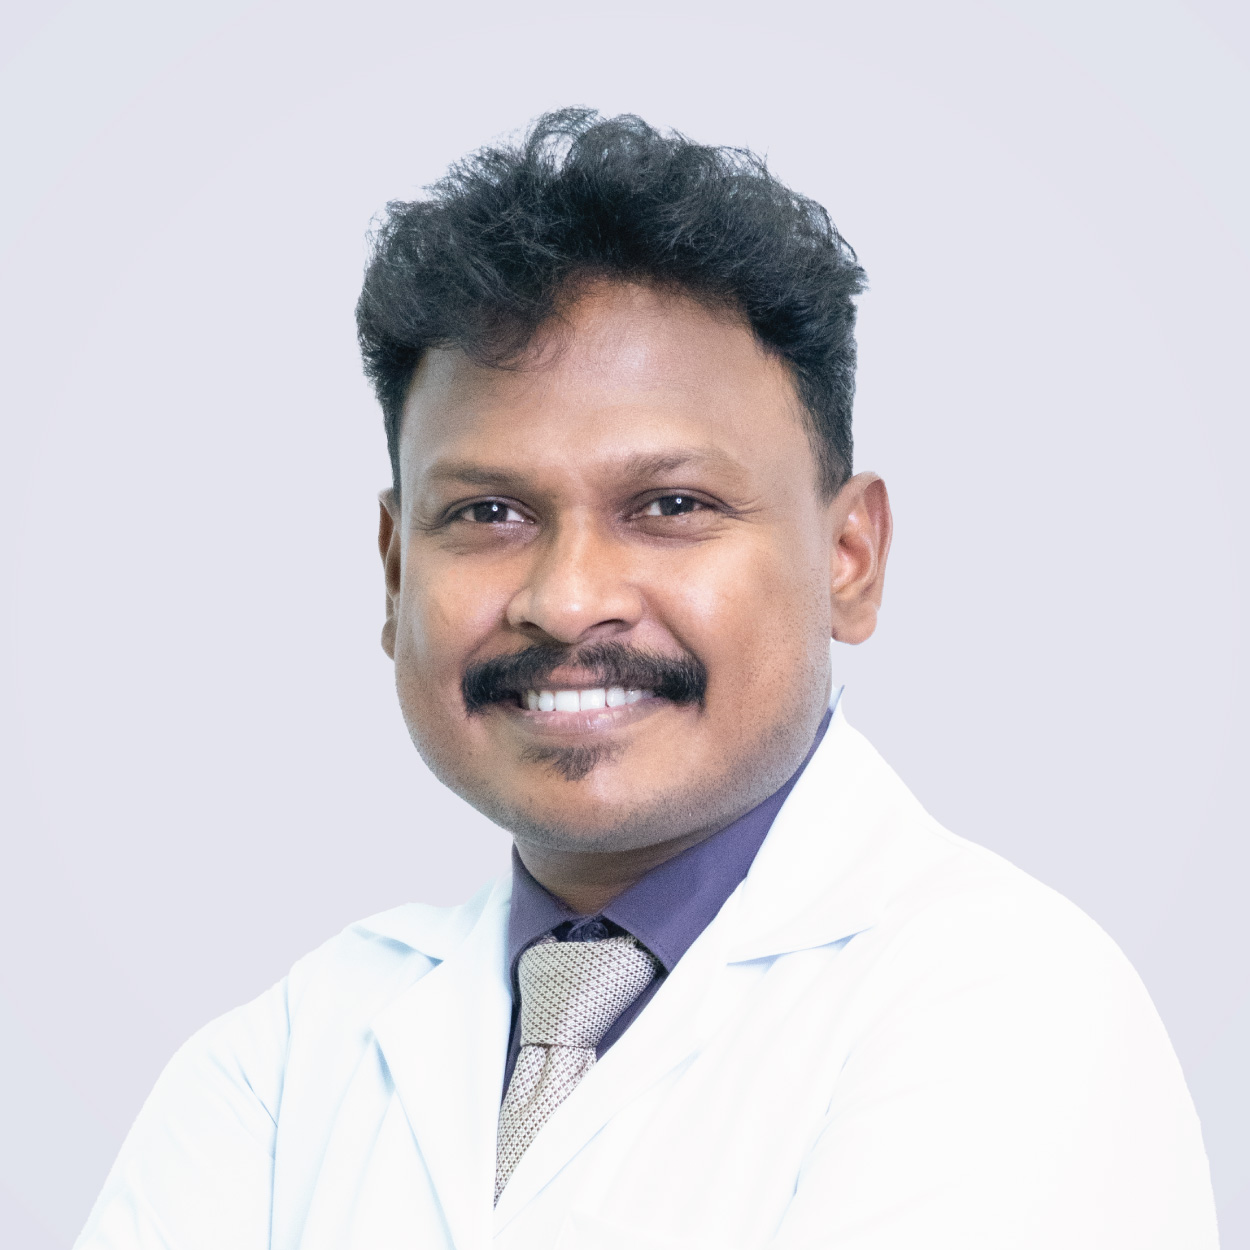 Dr. Rengesh Sambasivan, specialized in internal medicine in Dubai London Hospital